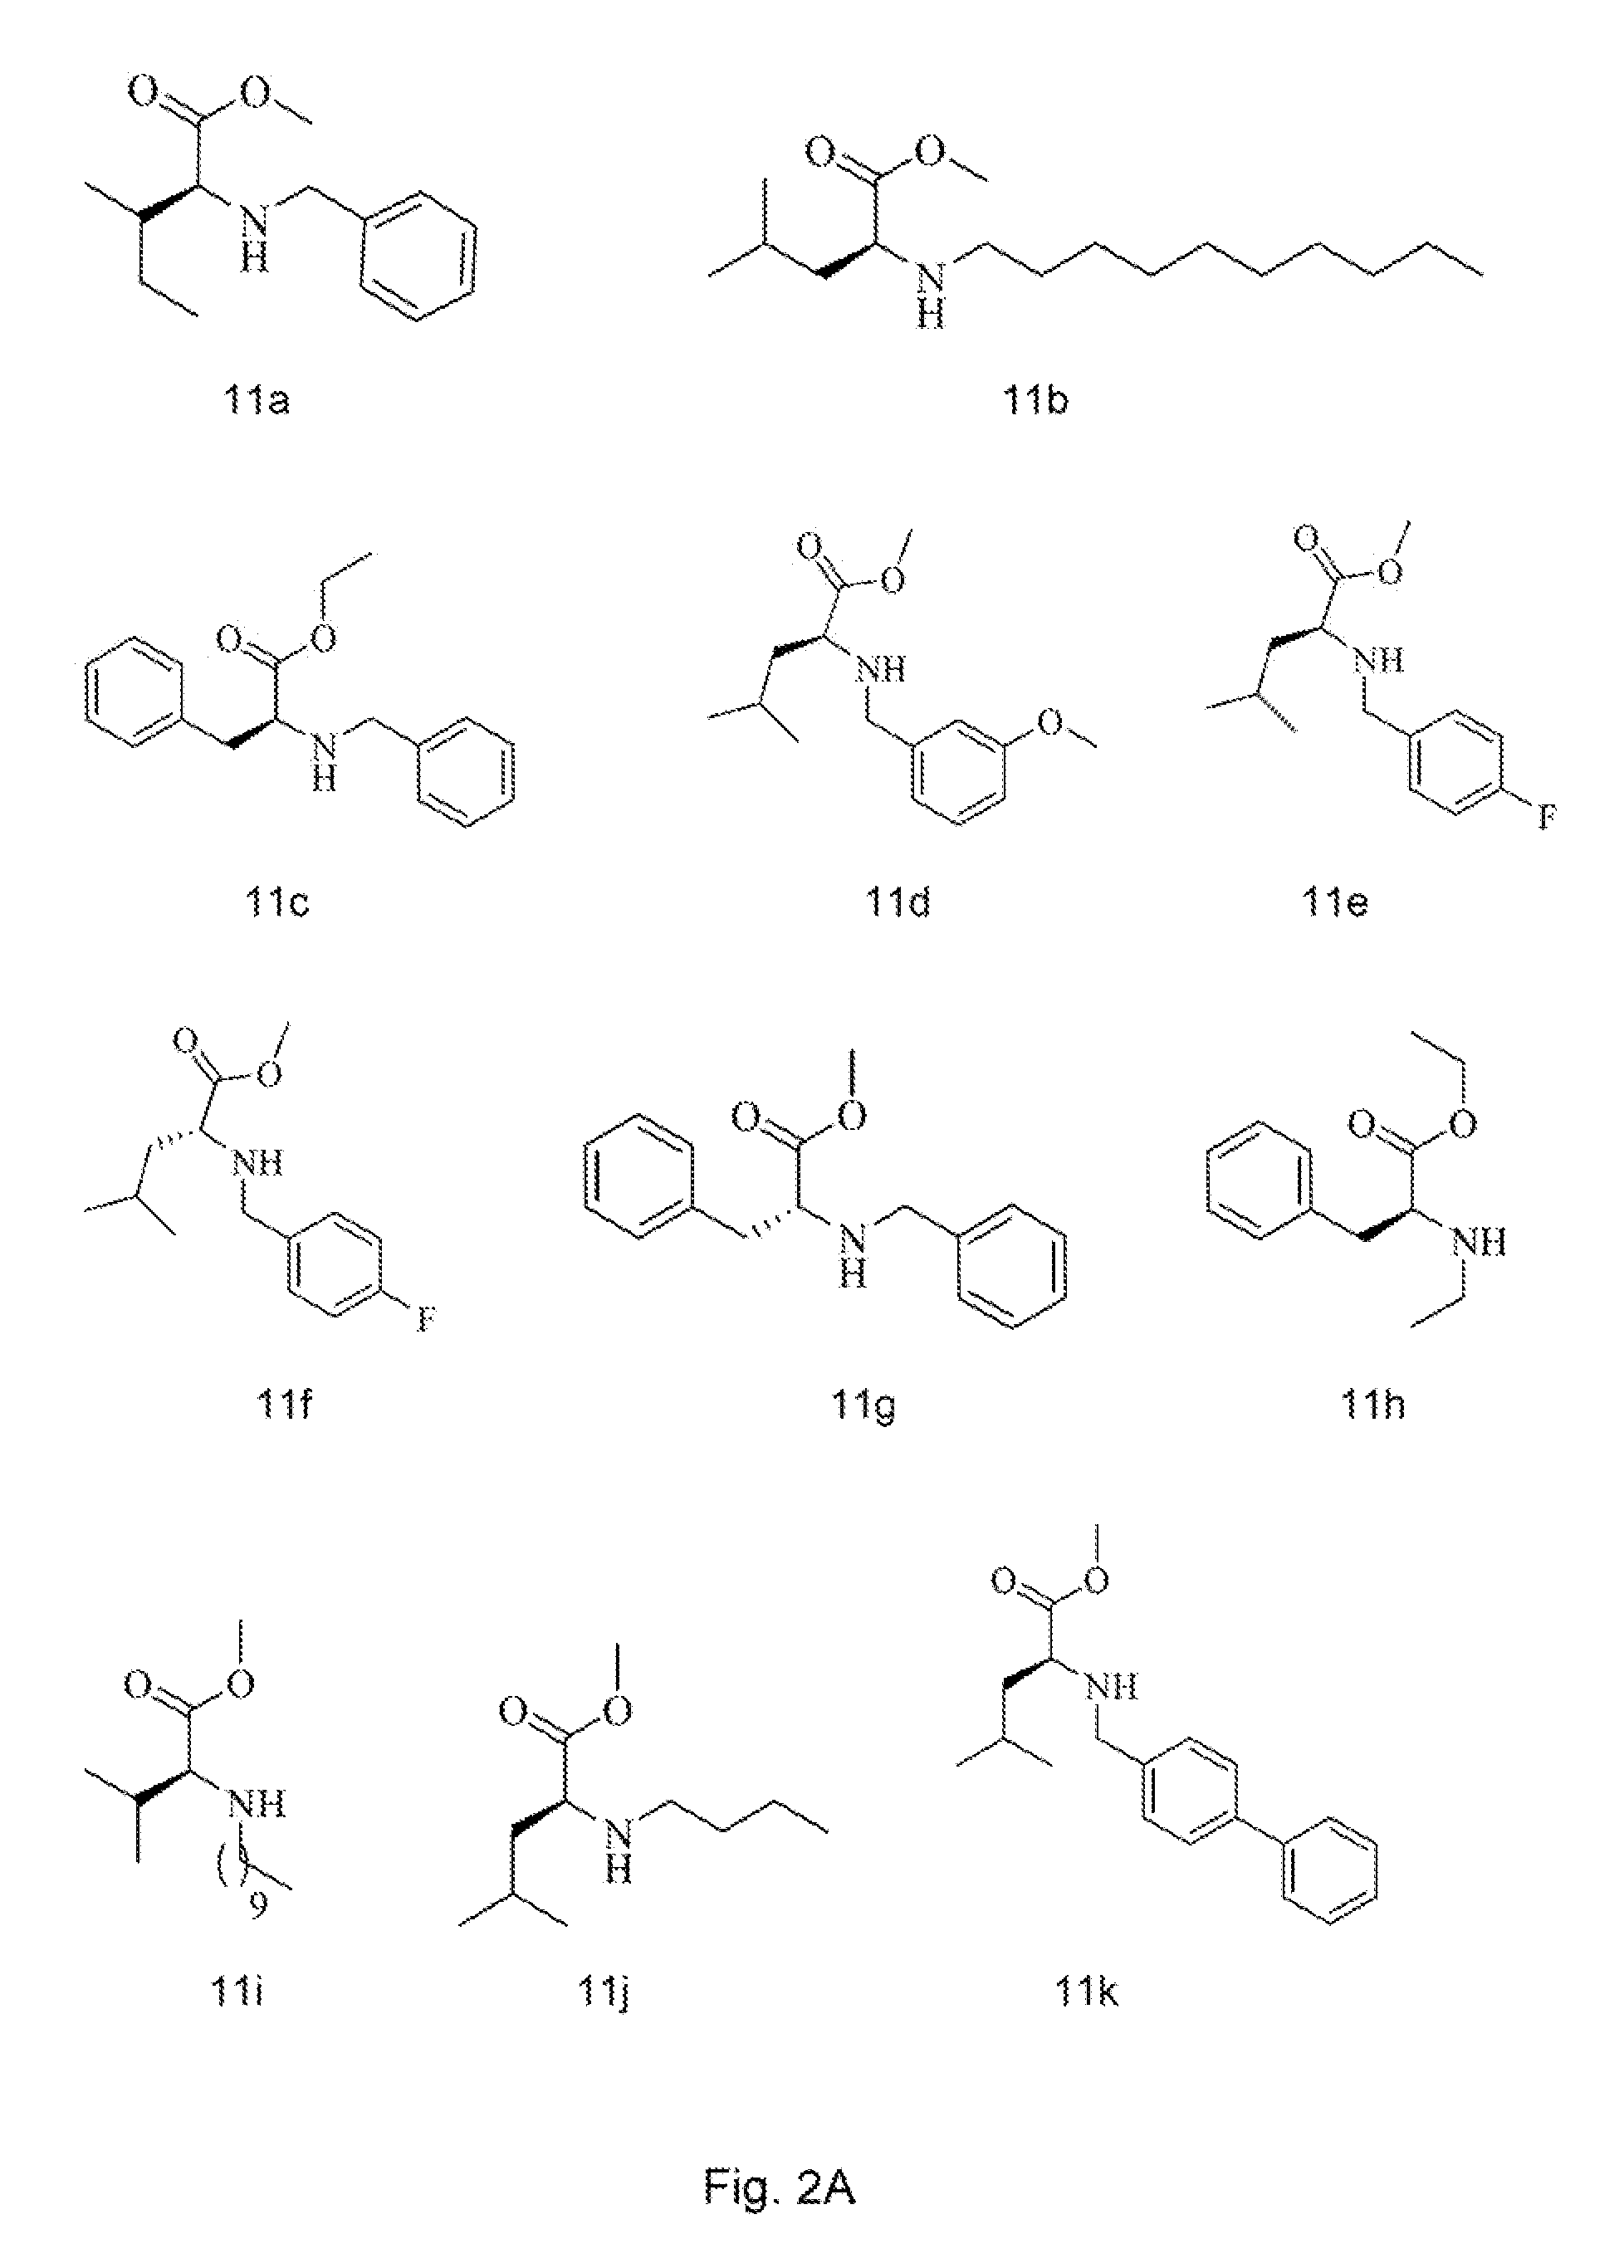 Analogs of tetramic acid